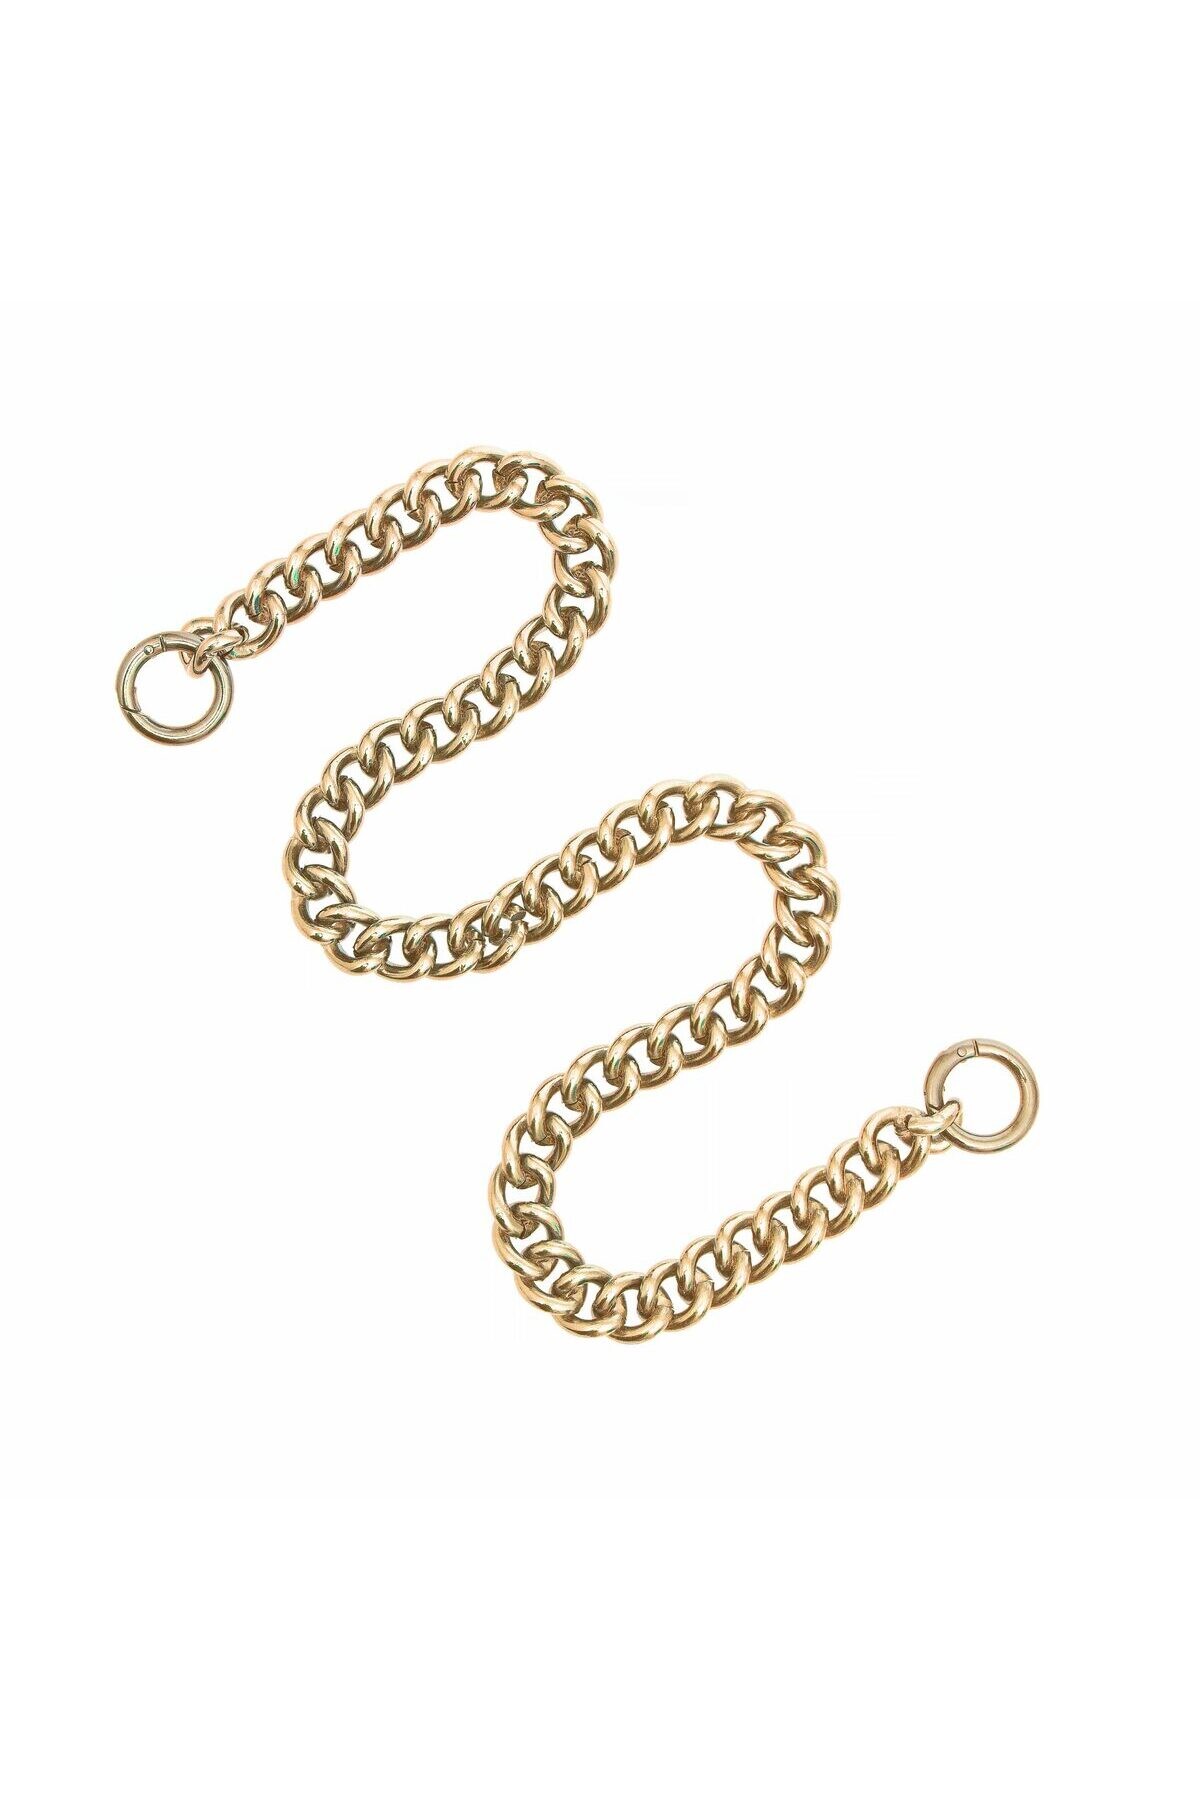 Chain Strap 90cm- Gold